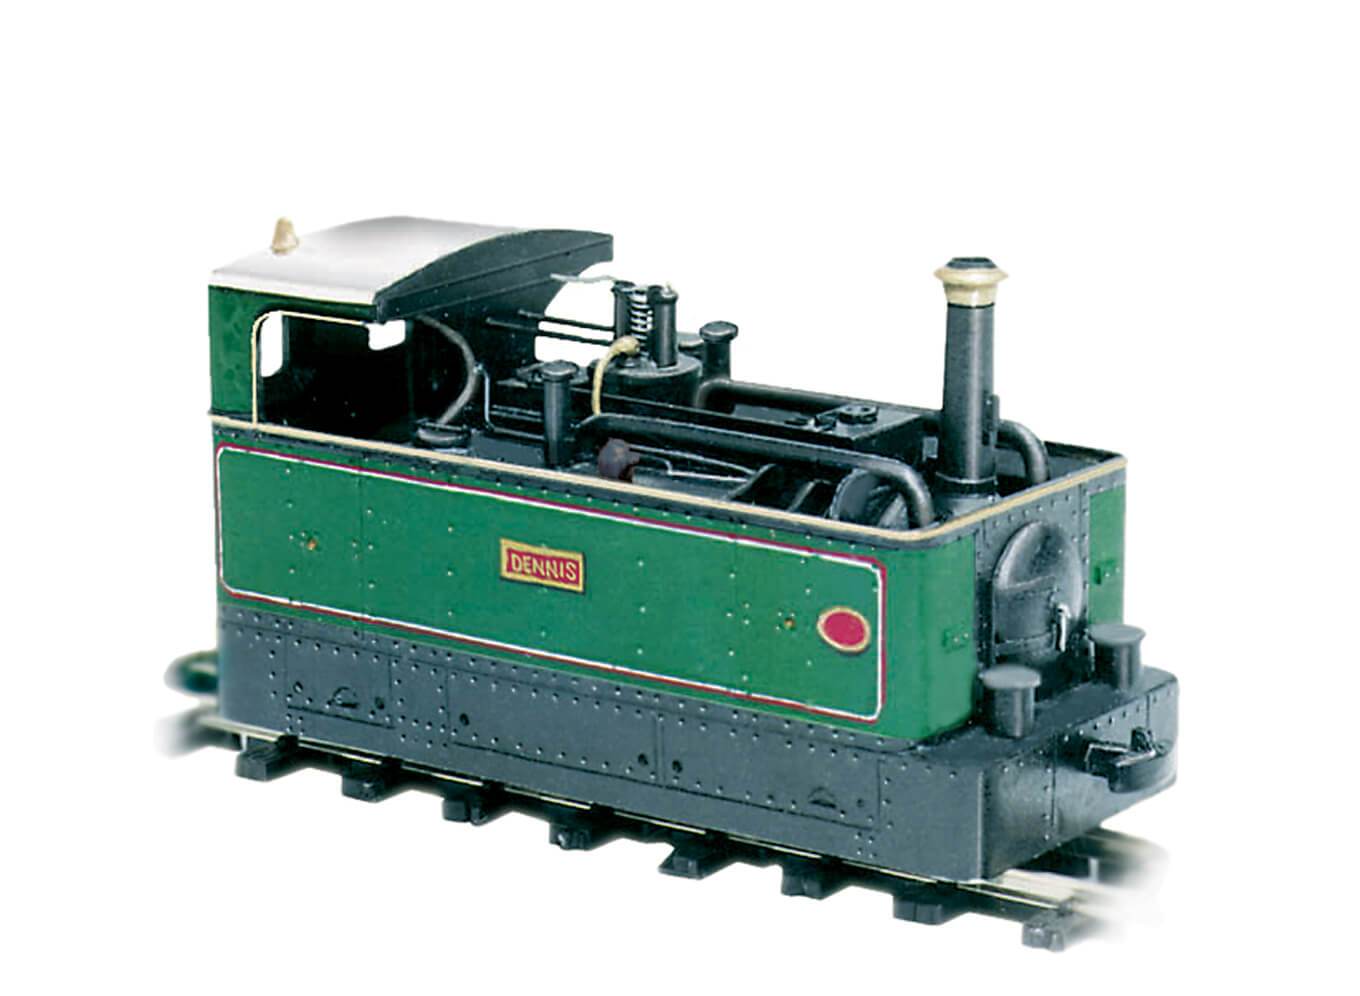 009 model railway kits